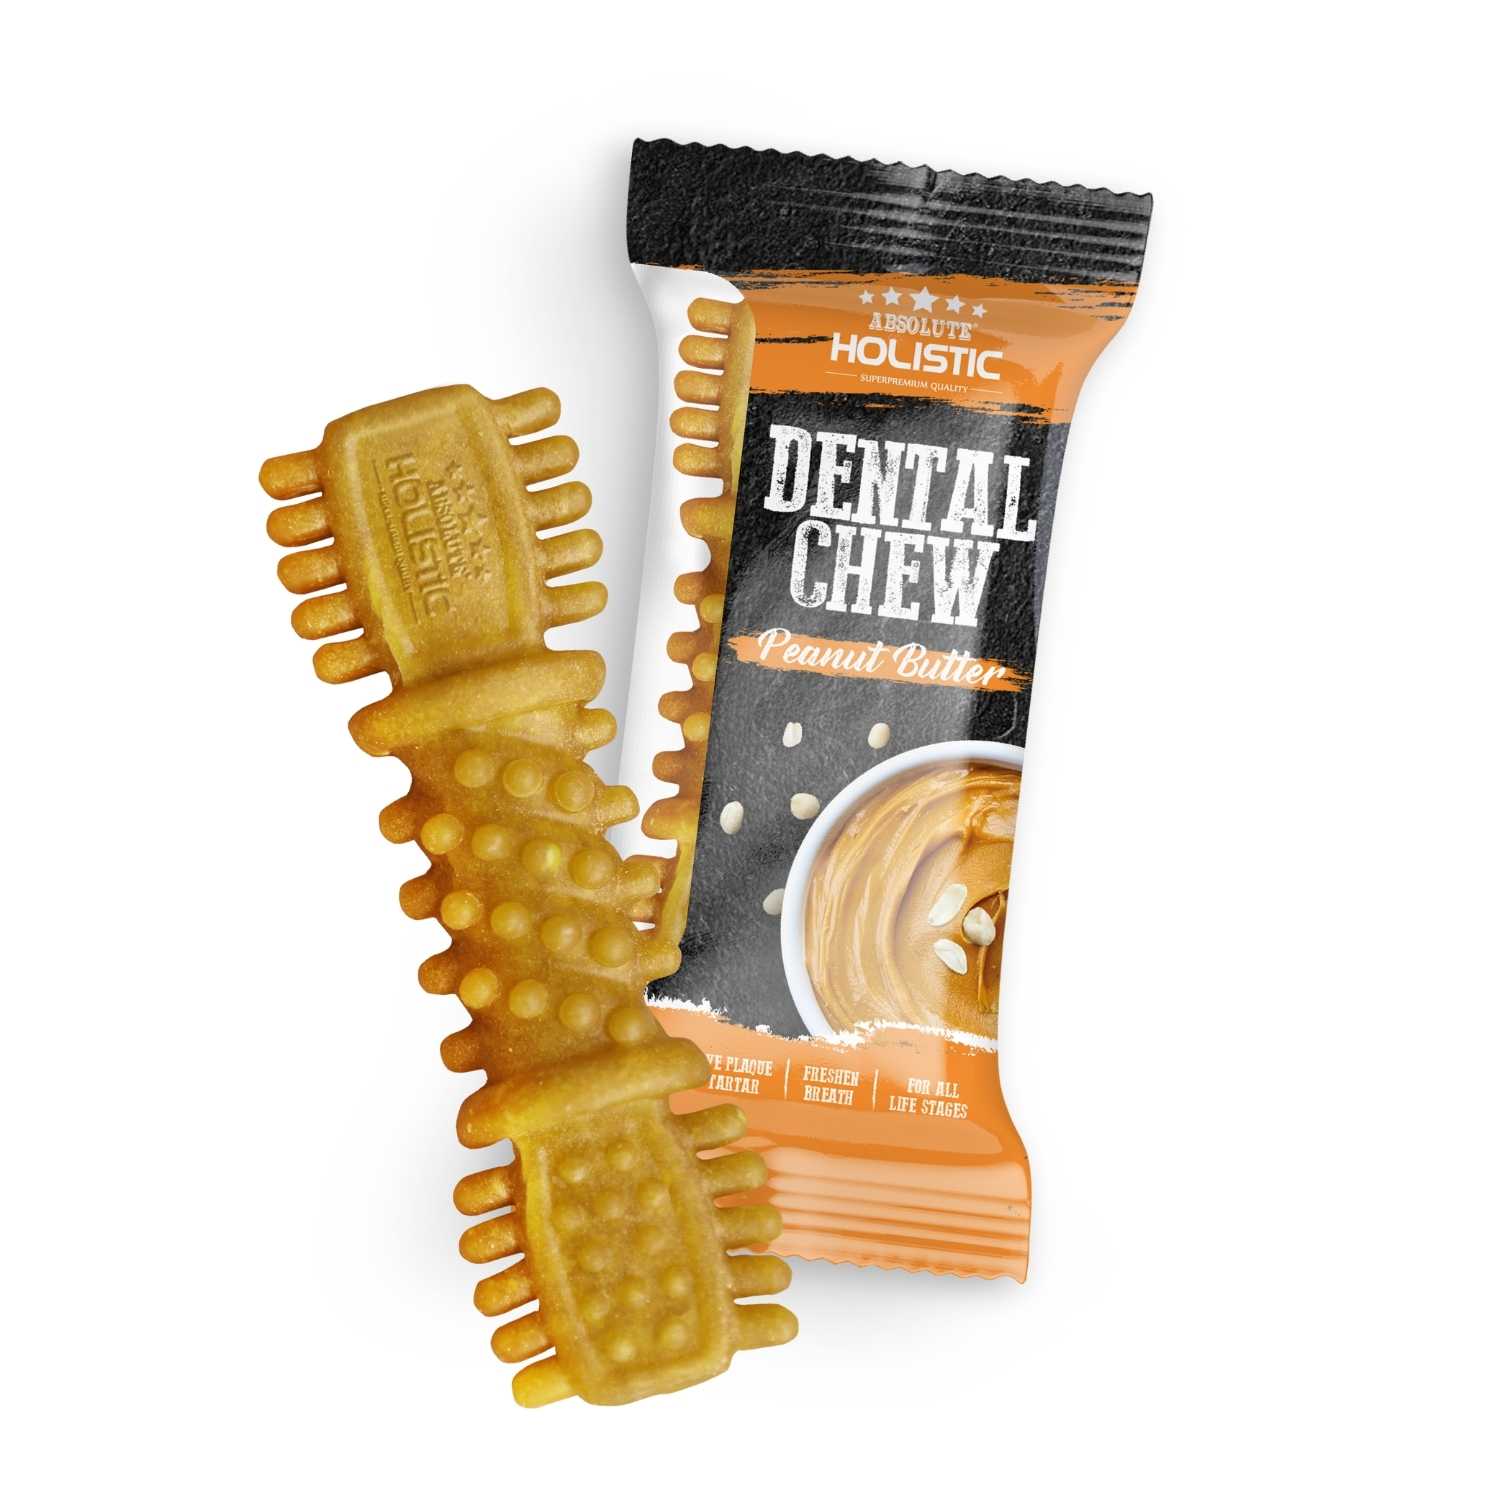 Absolute Holistic - Peanut Butter Dental Chew - Dog Treats (2 Sizes)